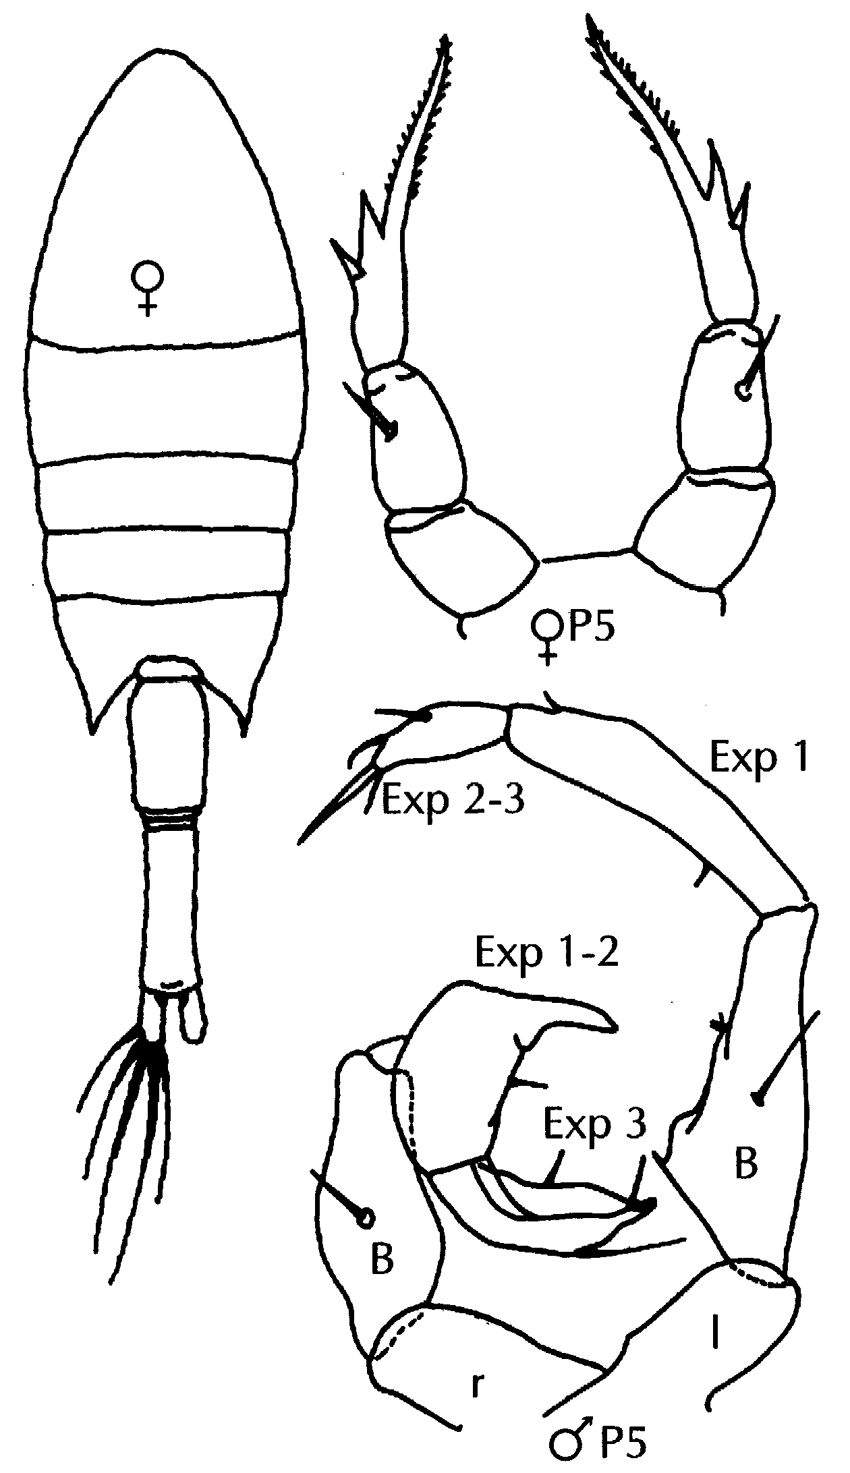 Species Calanopia minor - Plate 8 of morphological figures